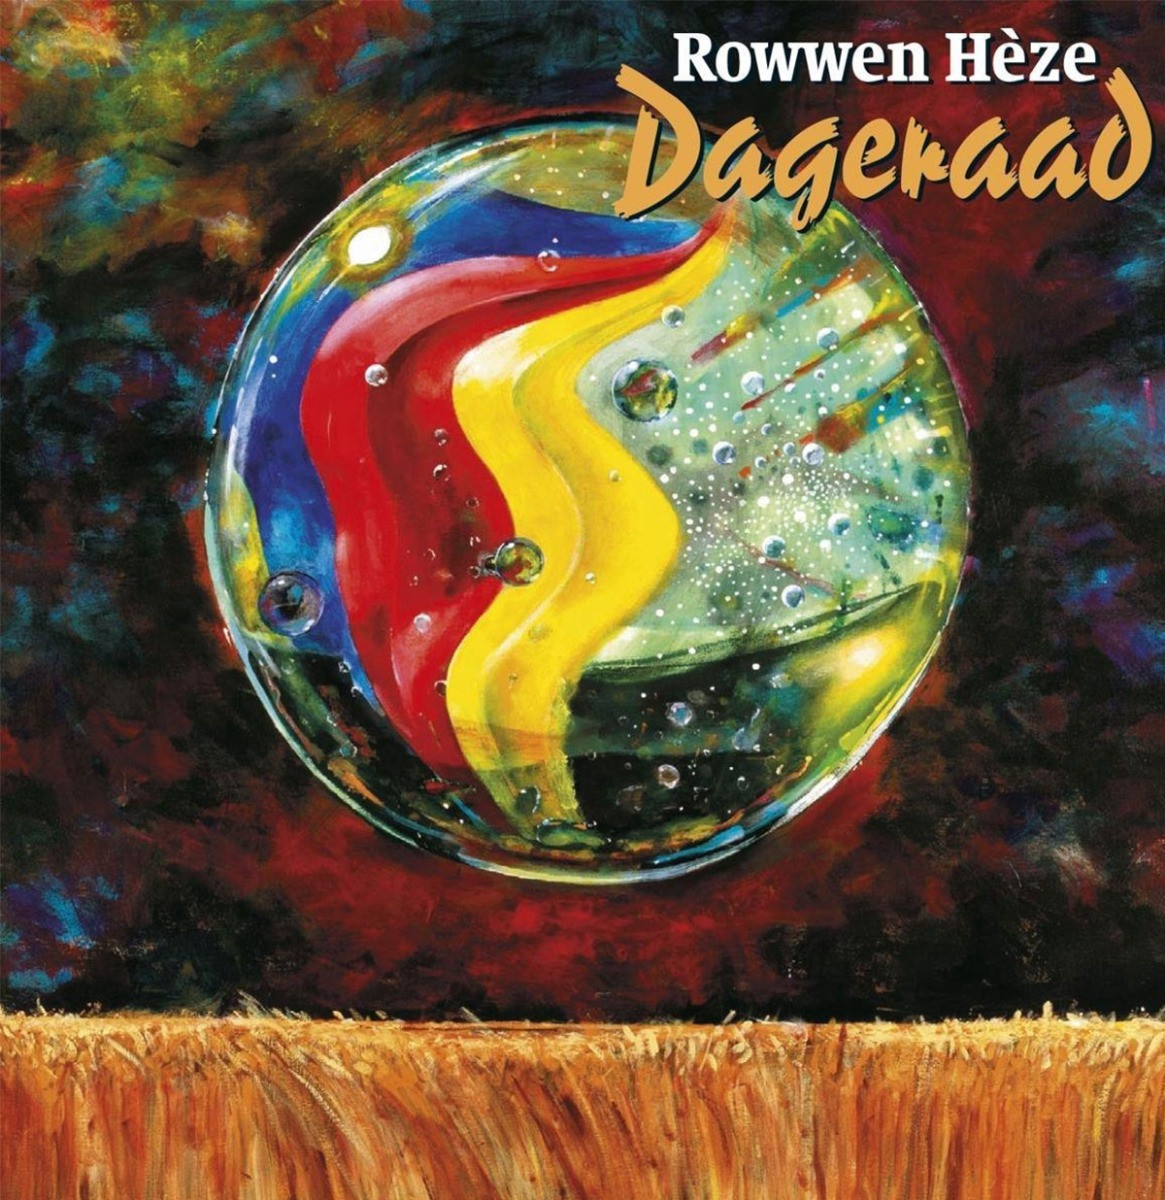 Rowwen Hèze - Dageraad 2LP